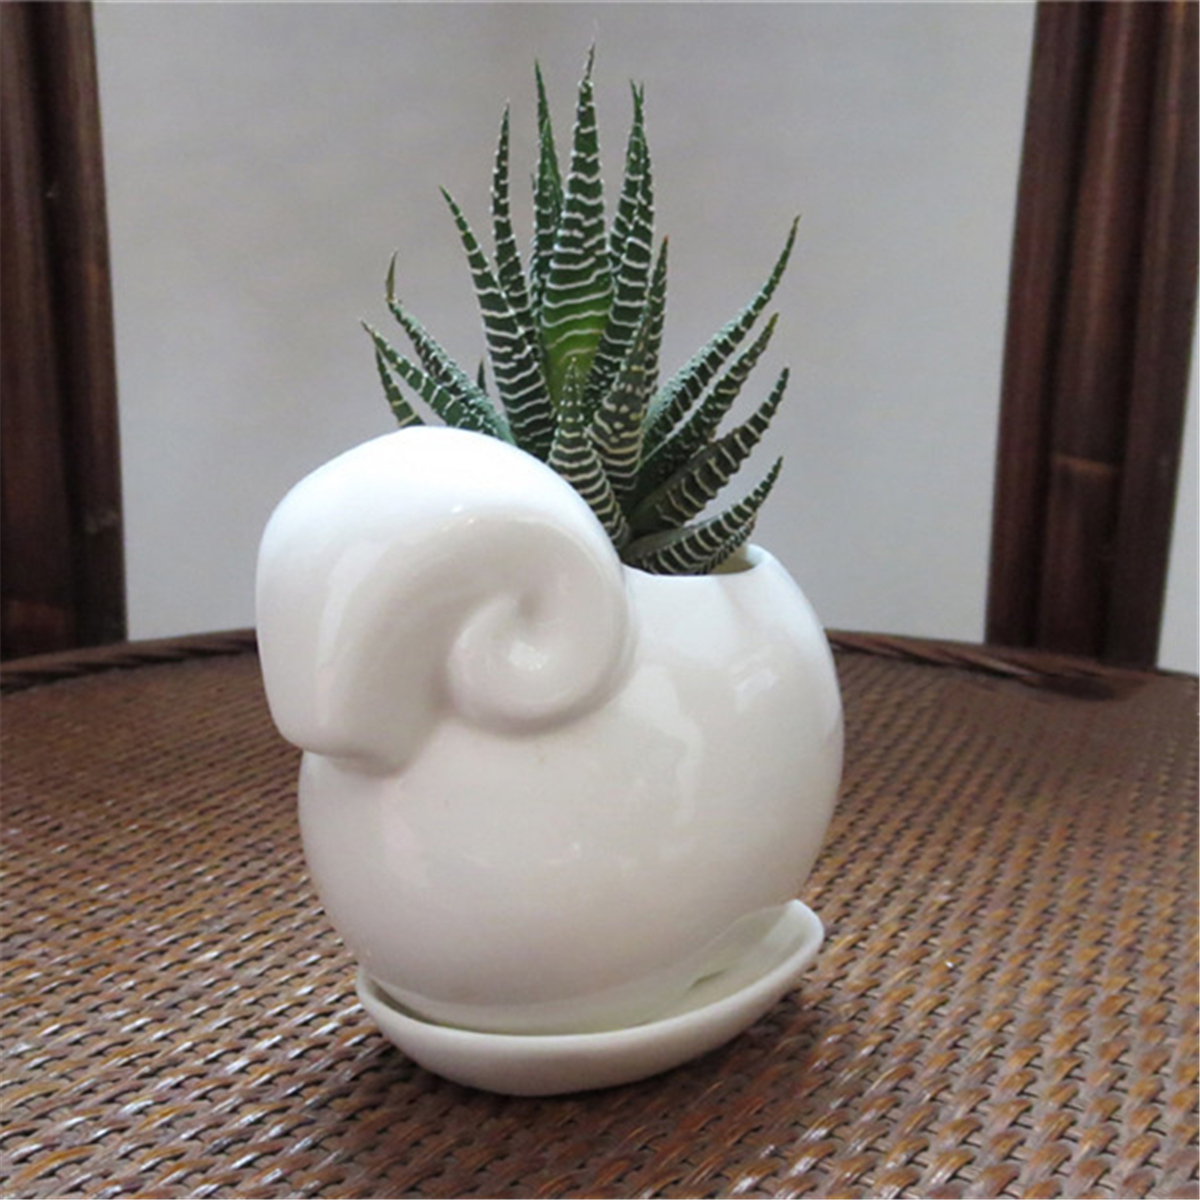 Rabbit-Ceramic-Flower-Pot-Planter-Outdoor-Indoor-Decoration-with-Round-Tray-1454876-5